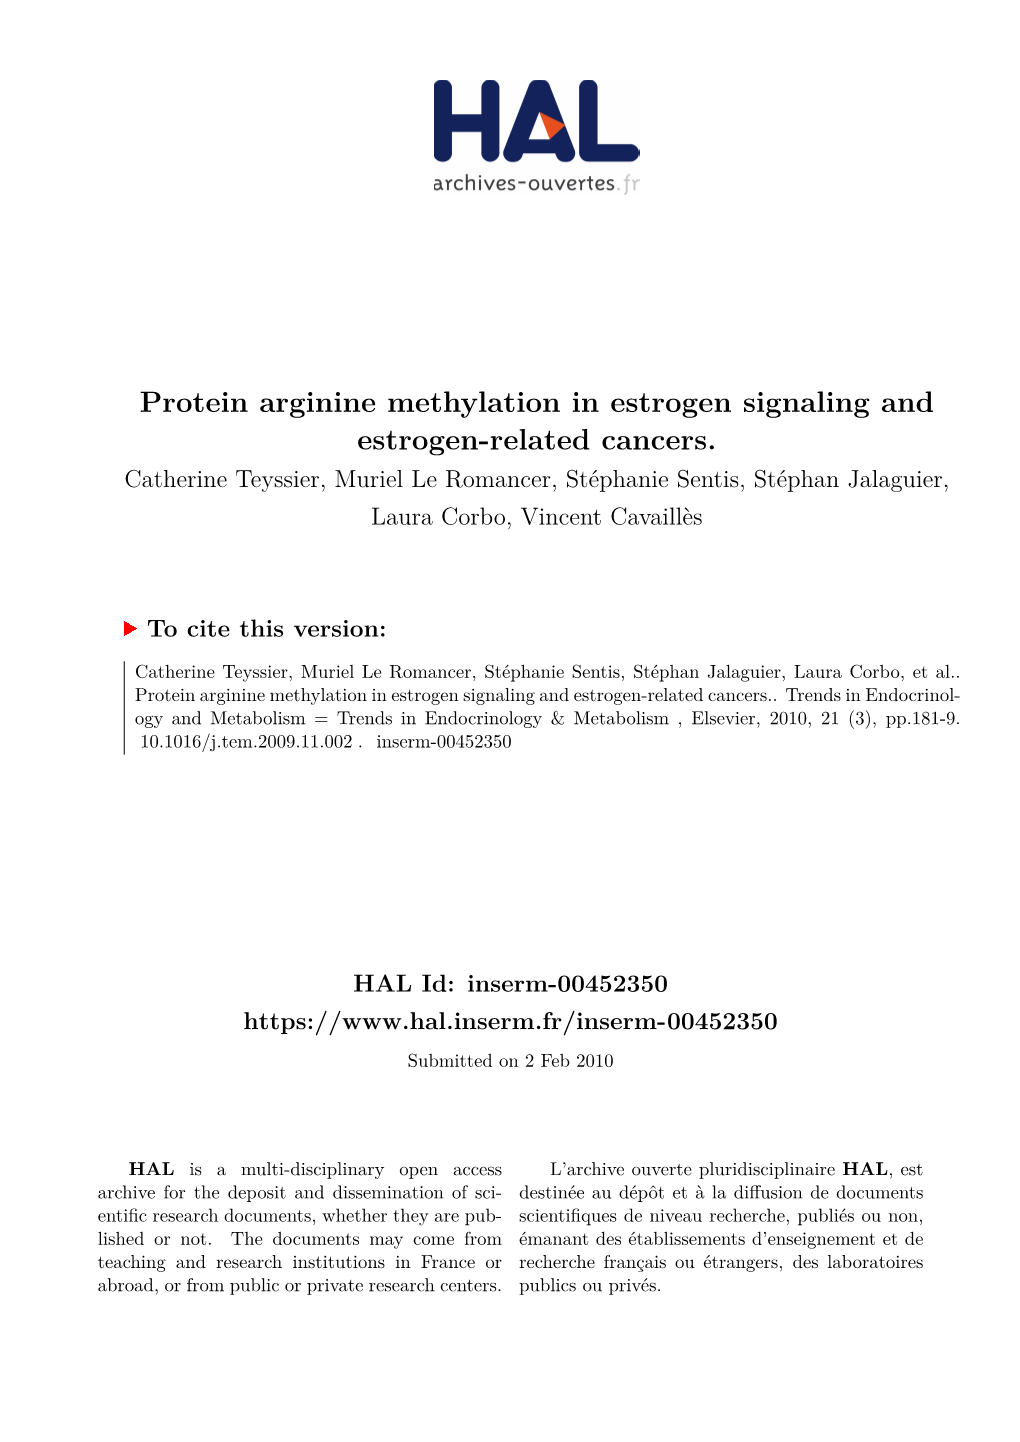 Protein Arginine Methylation in Estrogen Signaling and Estrogen-Related Cancers